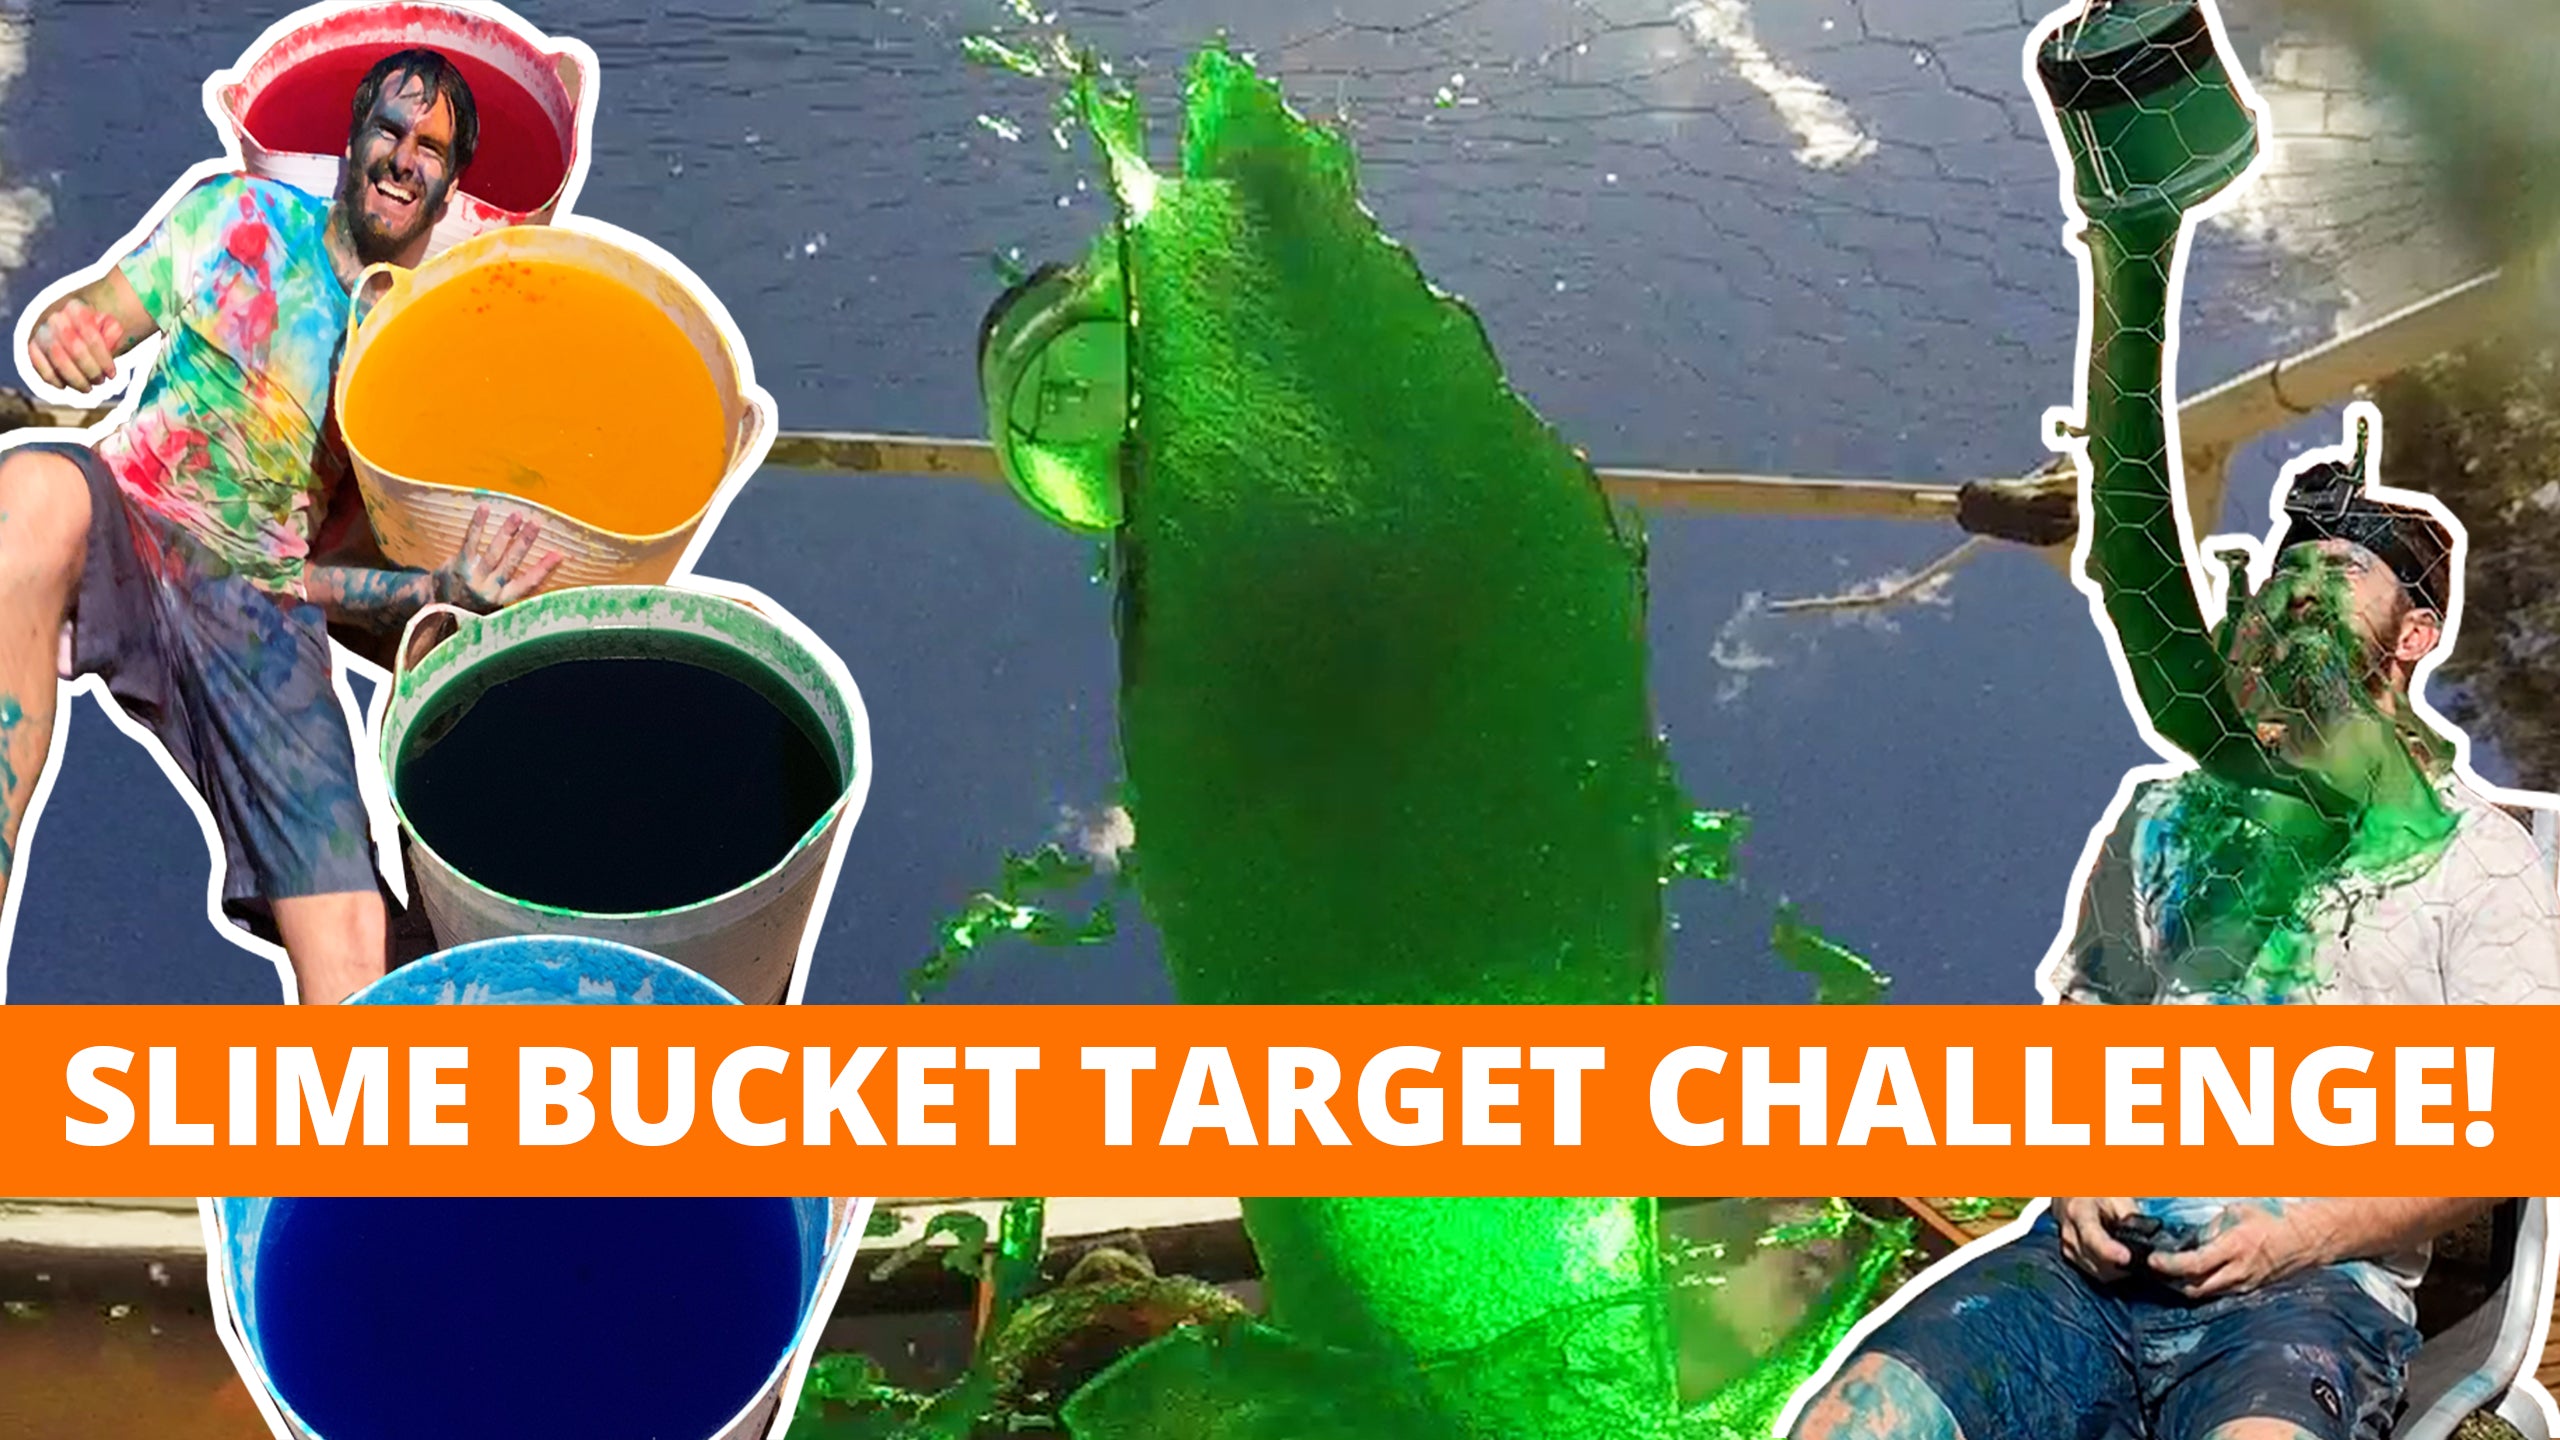 Load video: slime bucket carnival games dunk tank alternative